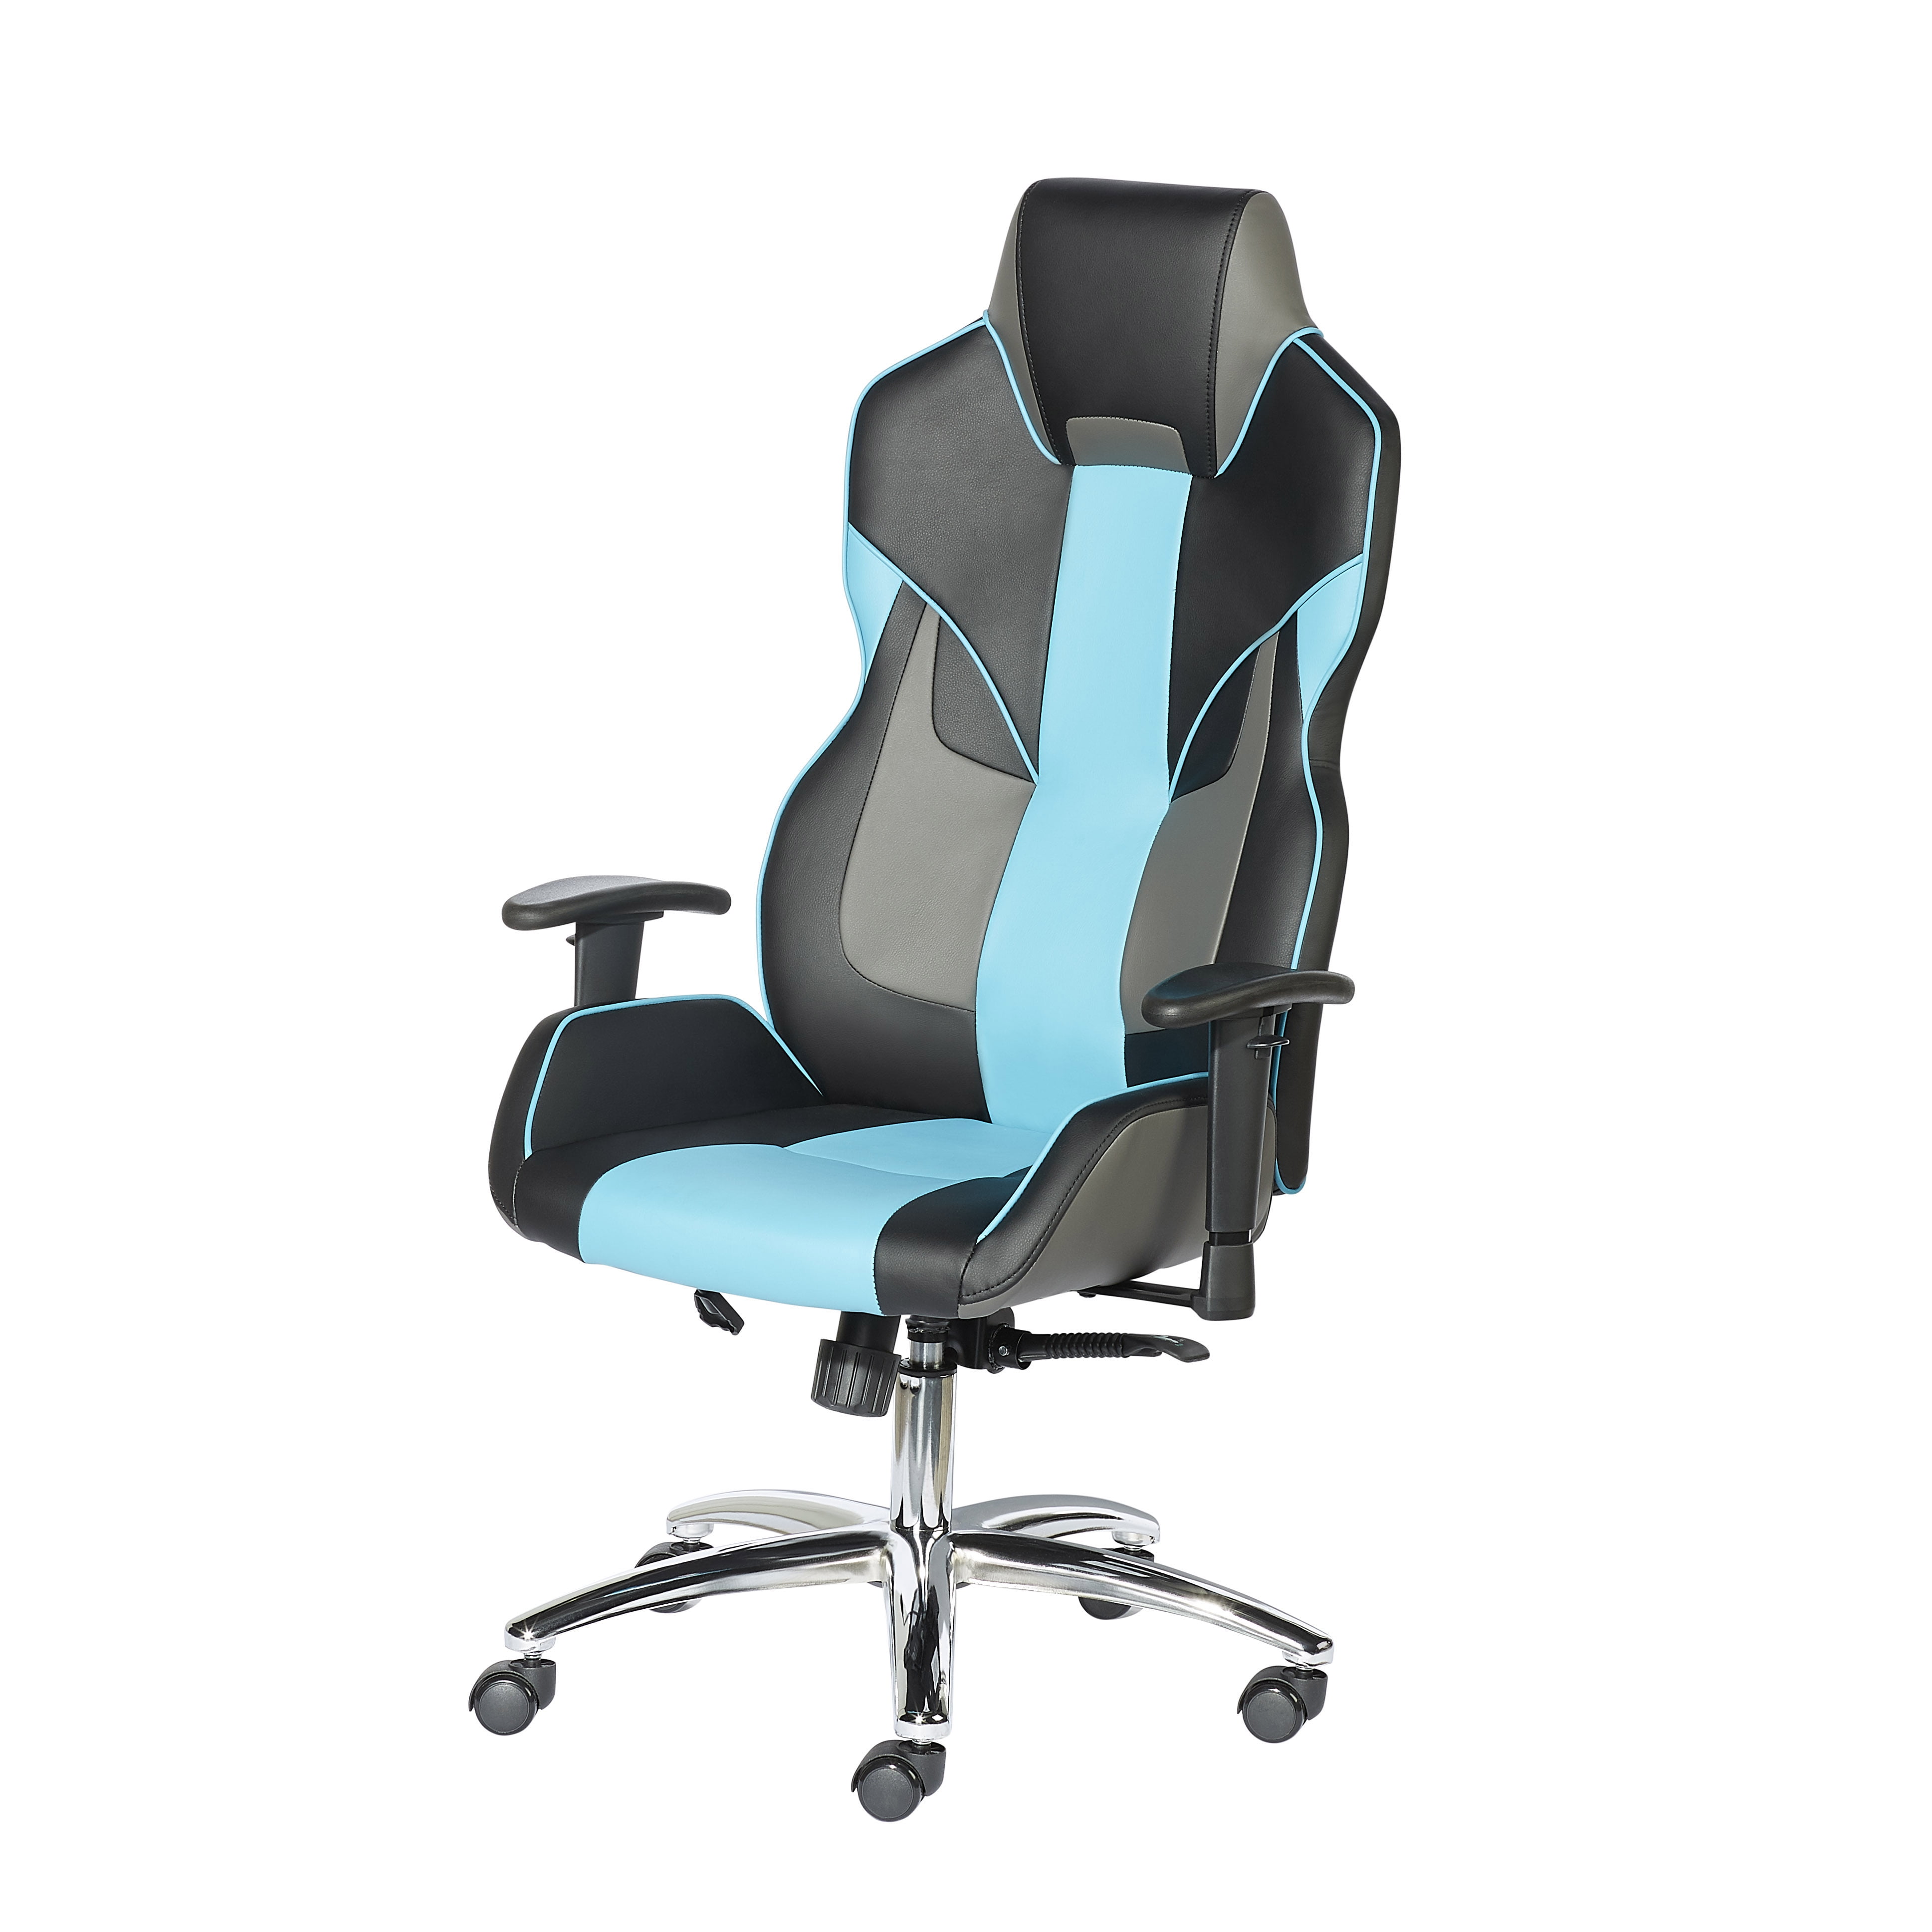 X Rocker PC Gaming Chair, Black and Blue